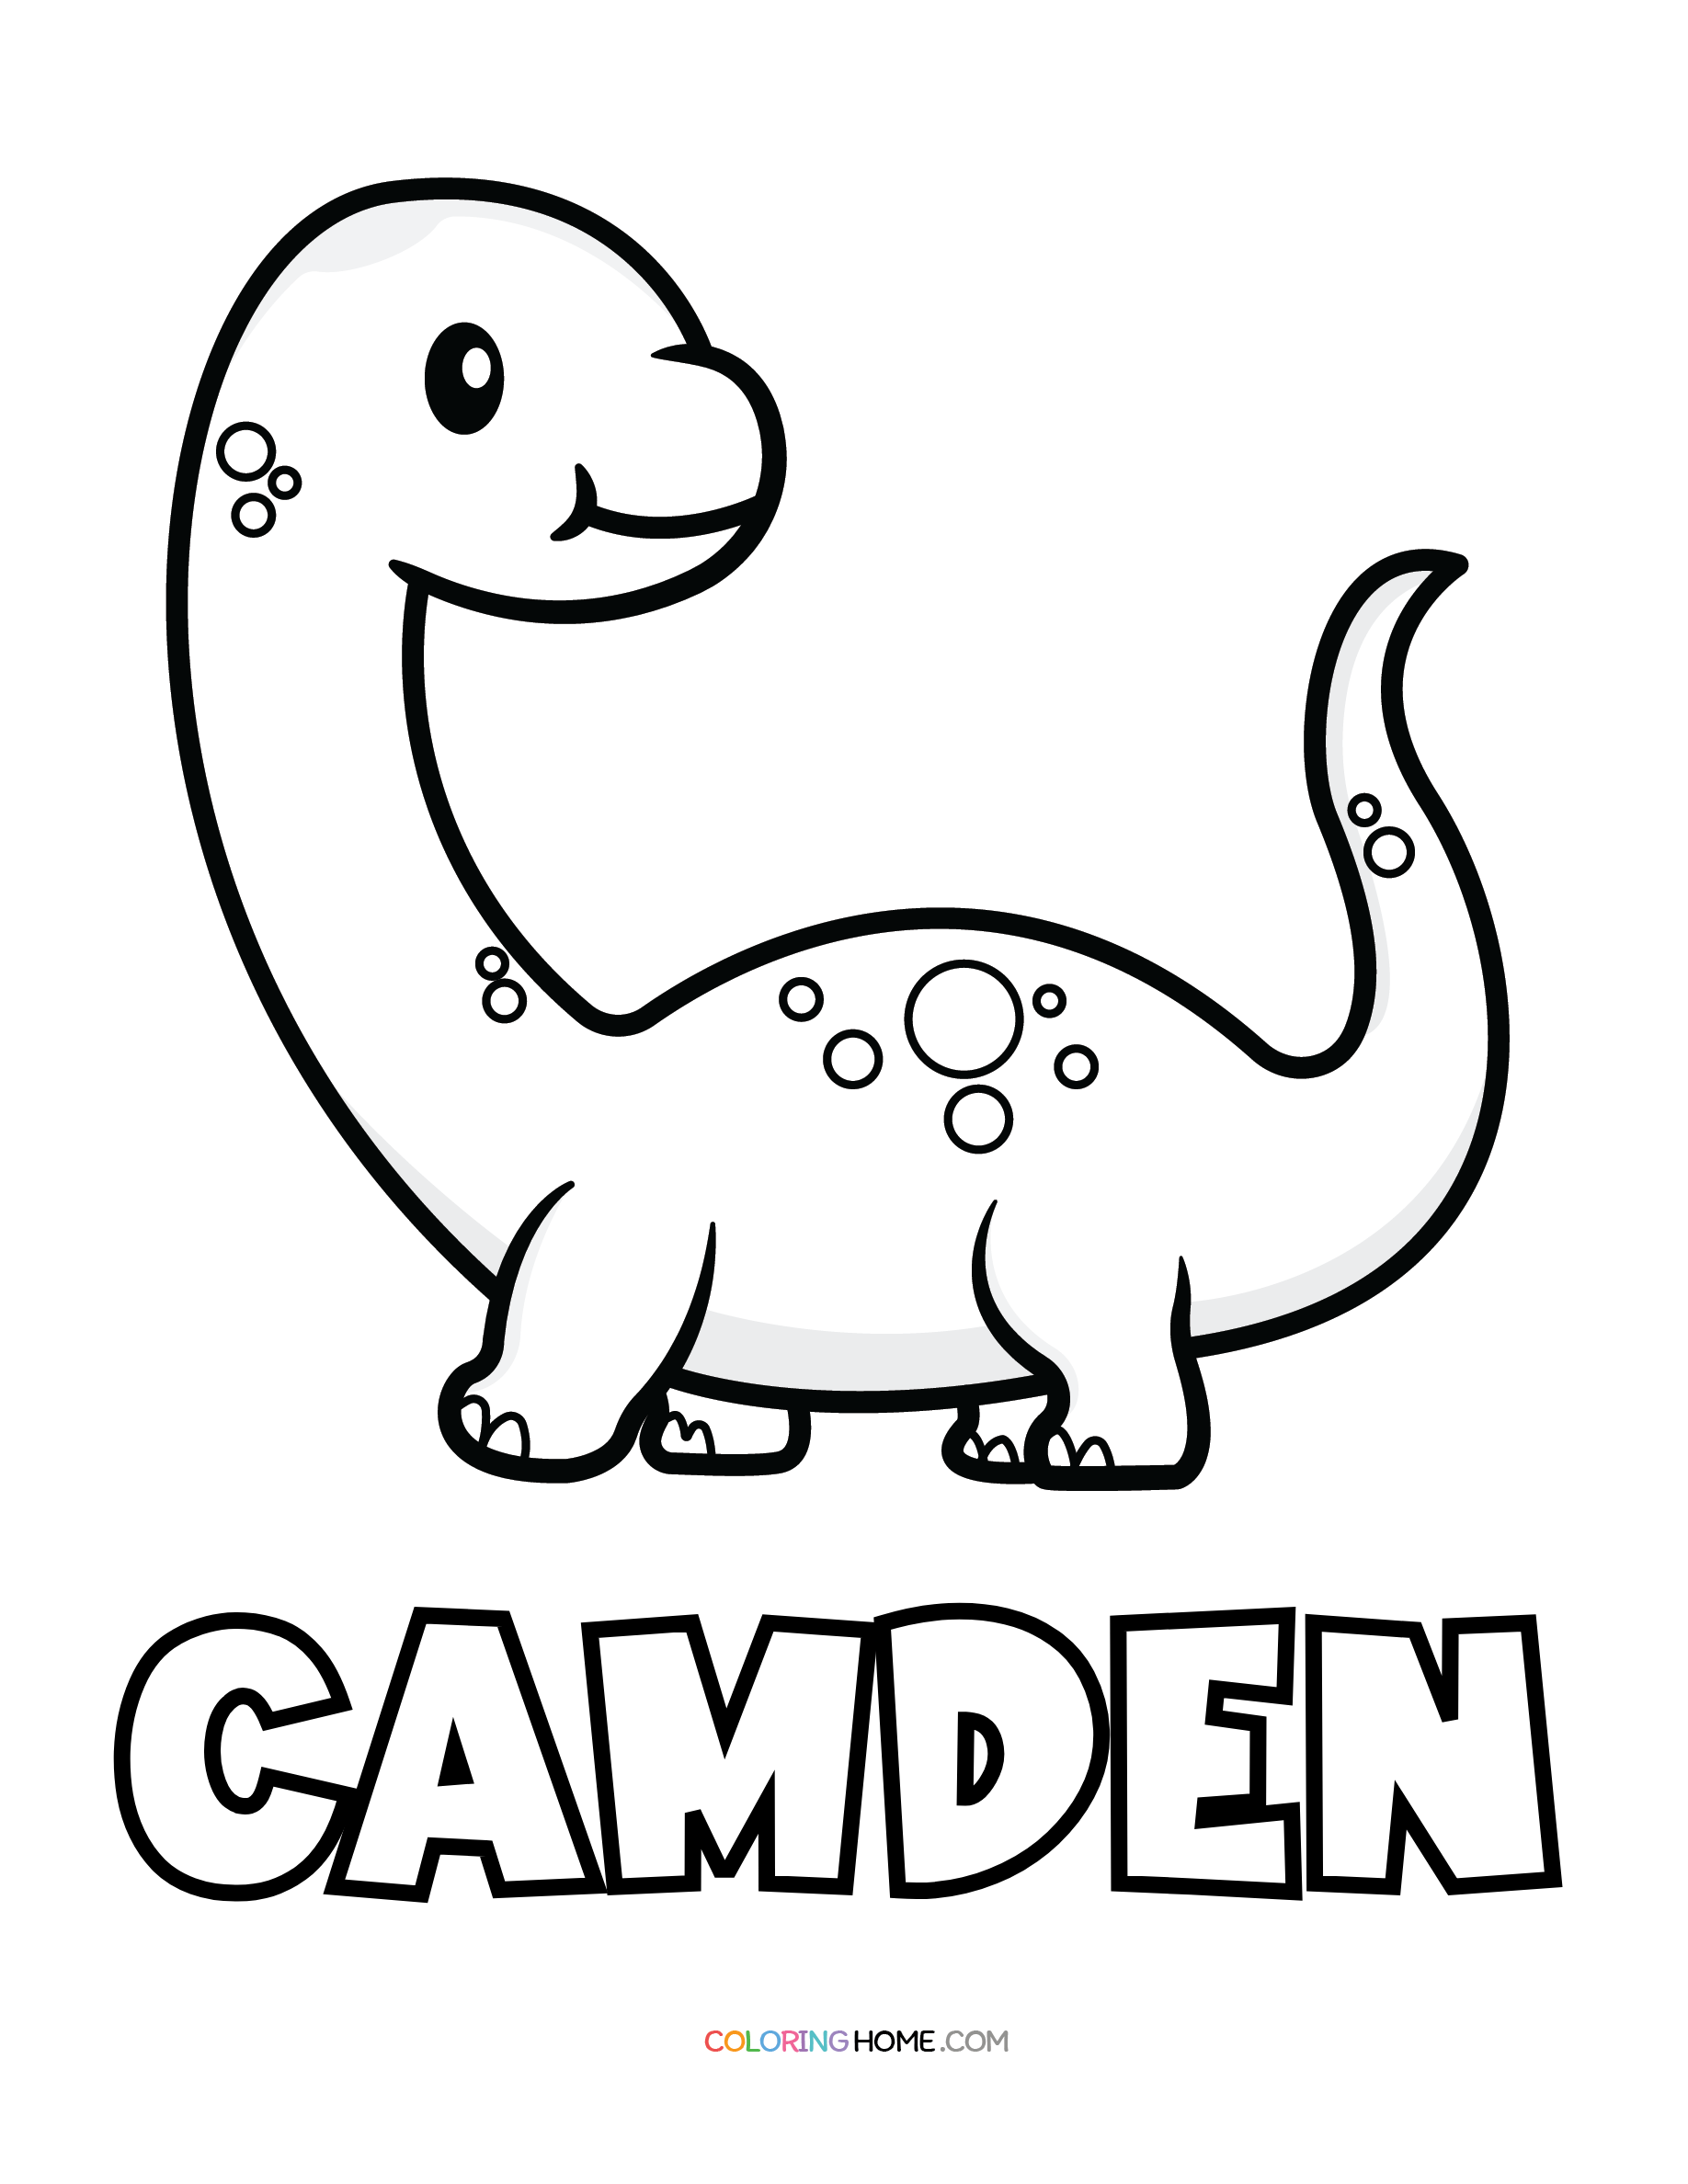 Camden dinosaur coloring page